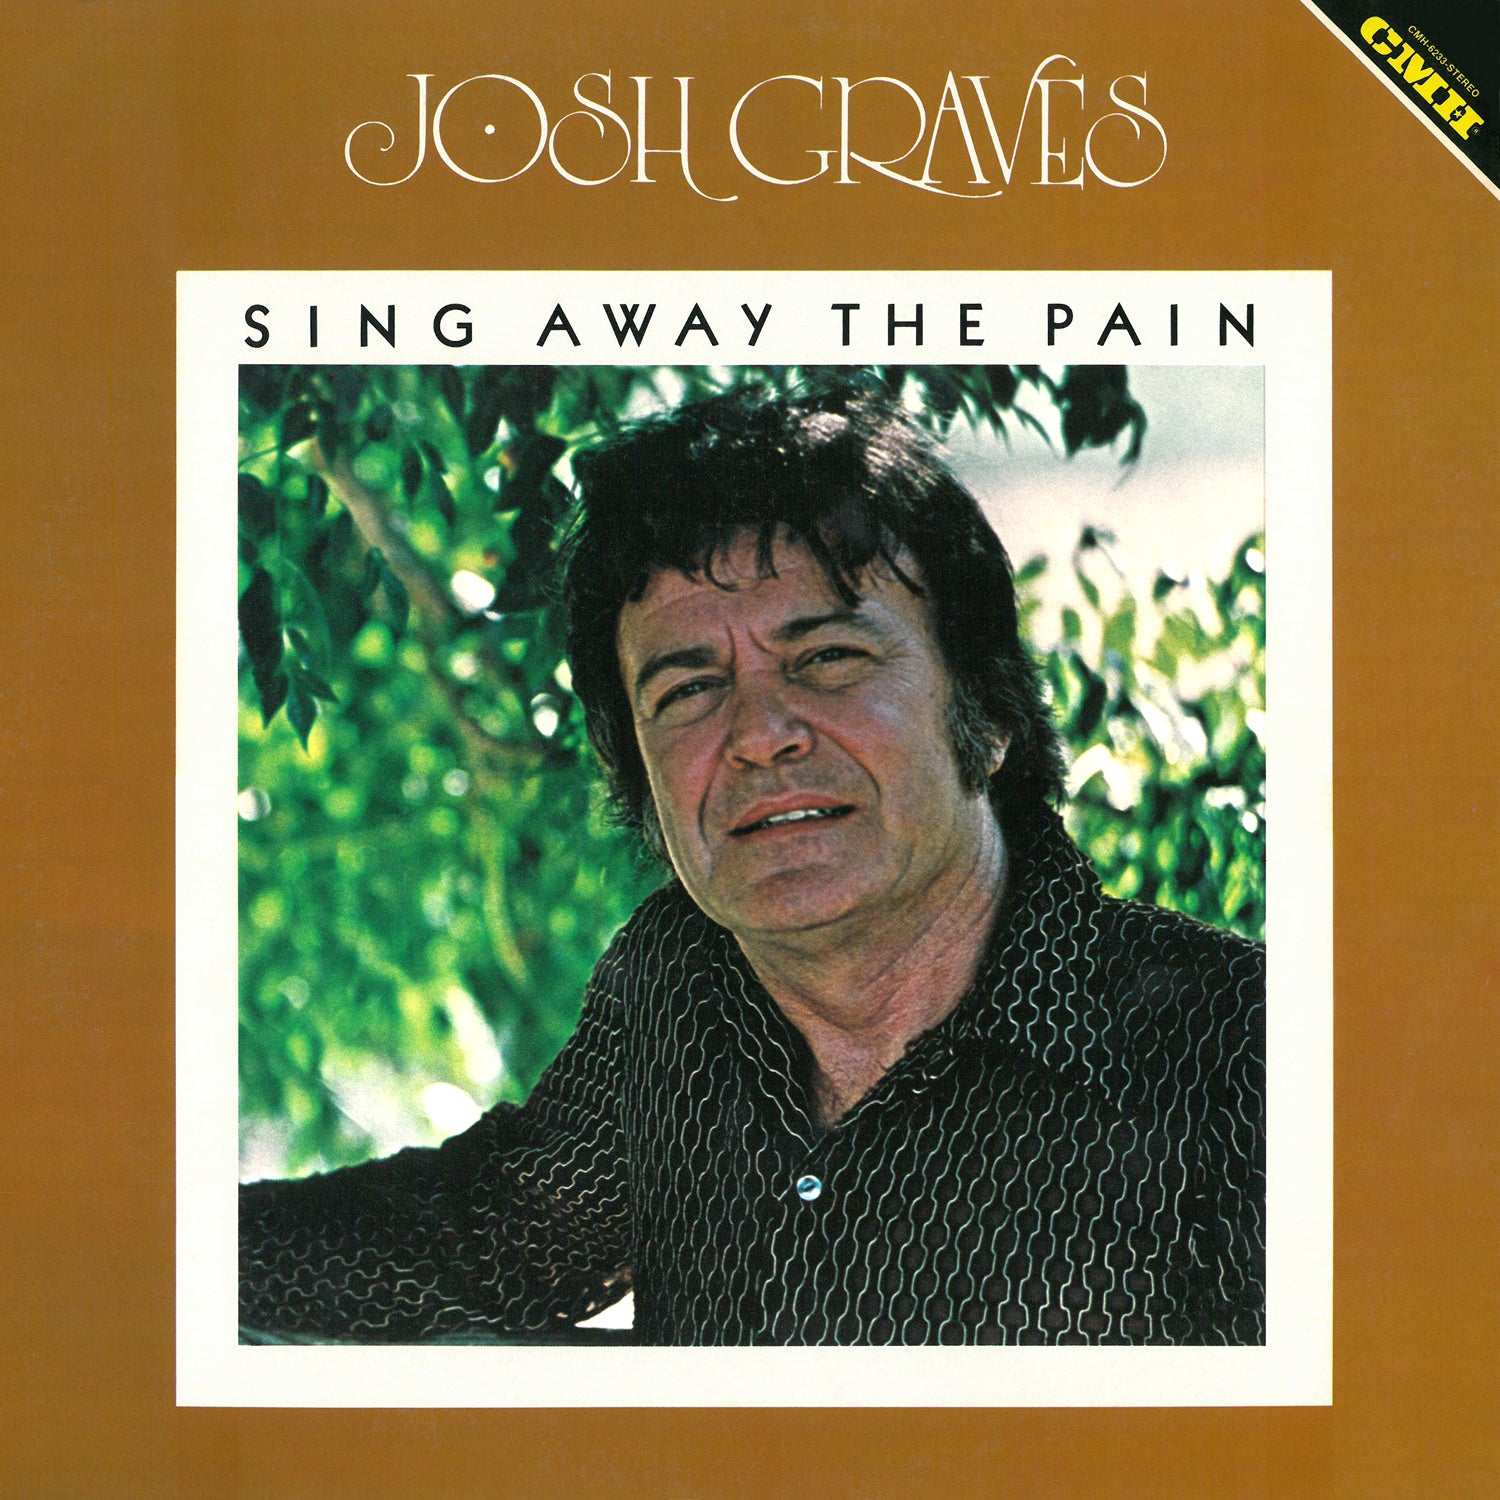 Josh Graves - Sing Away the Pain